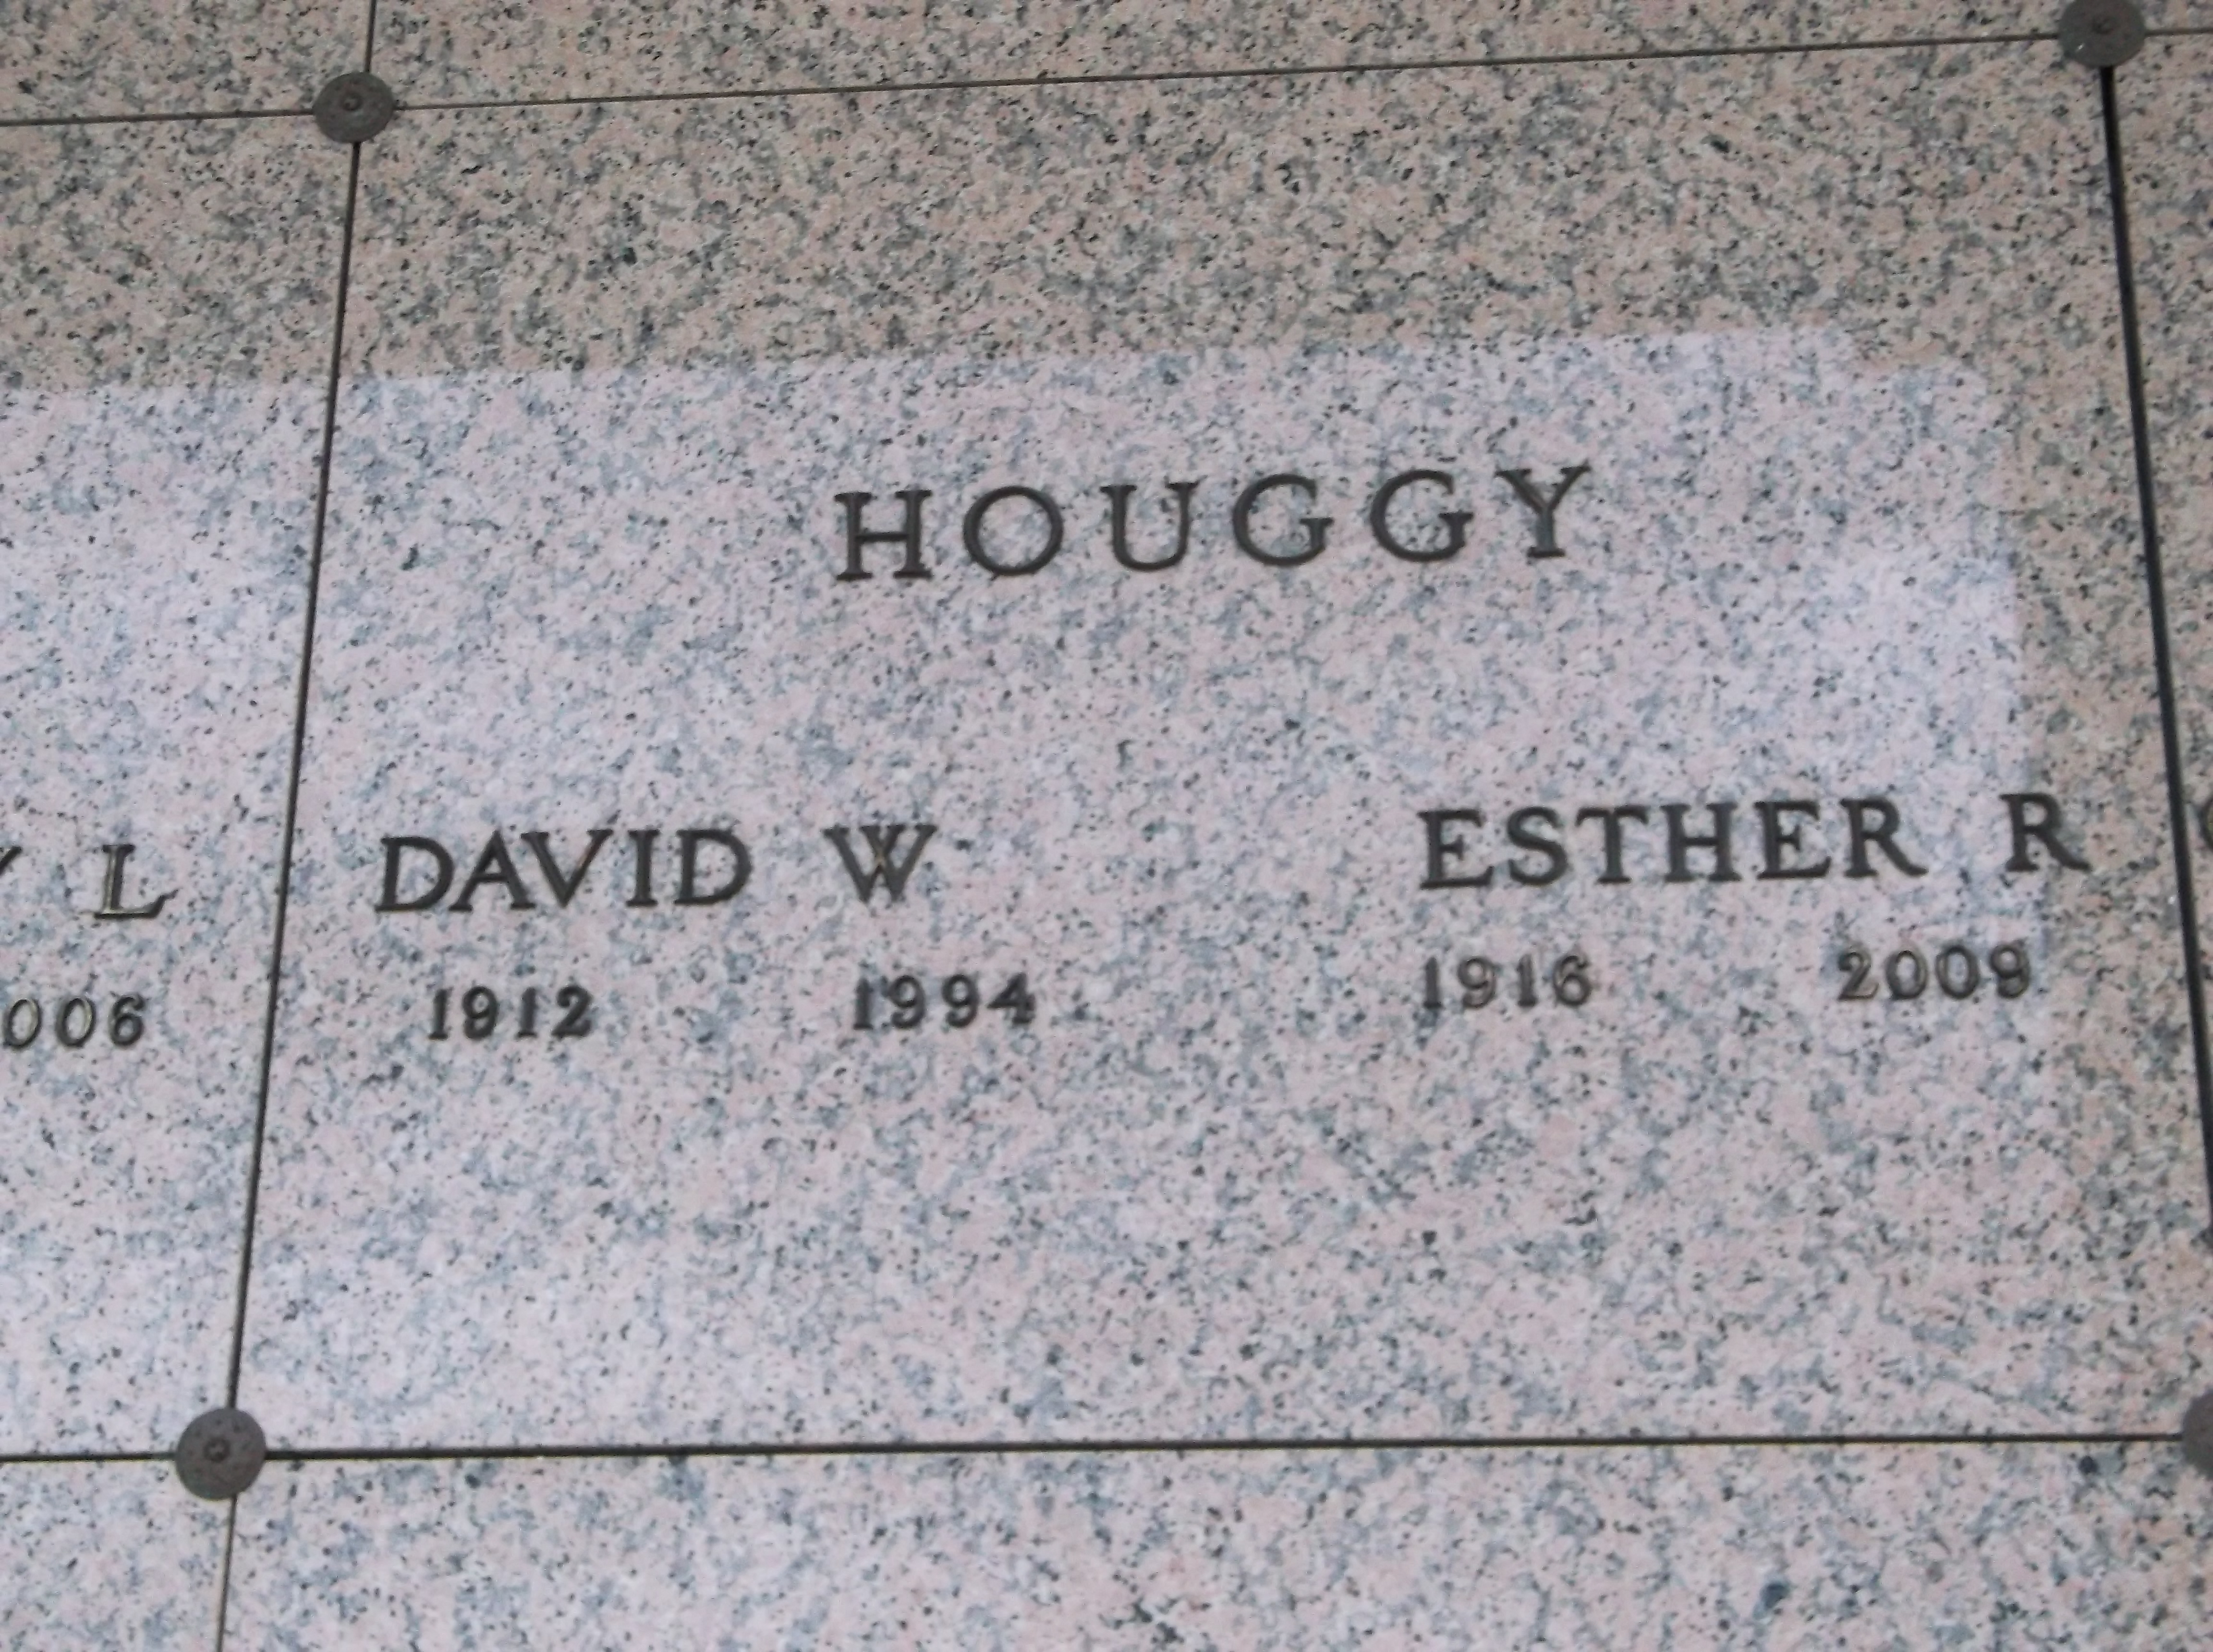 David W Houggy